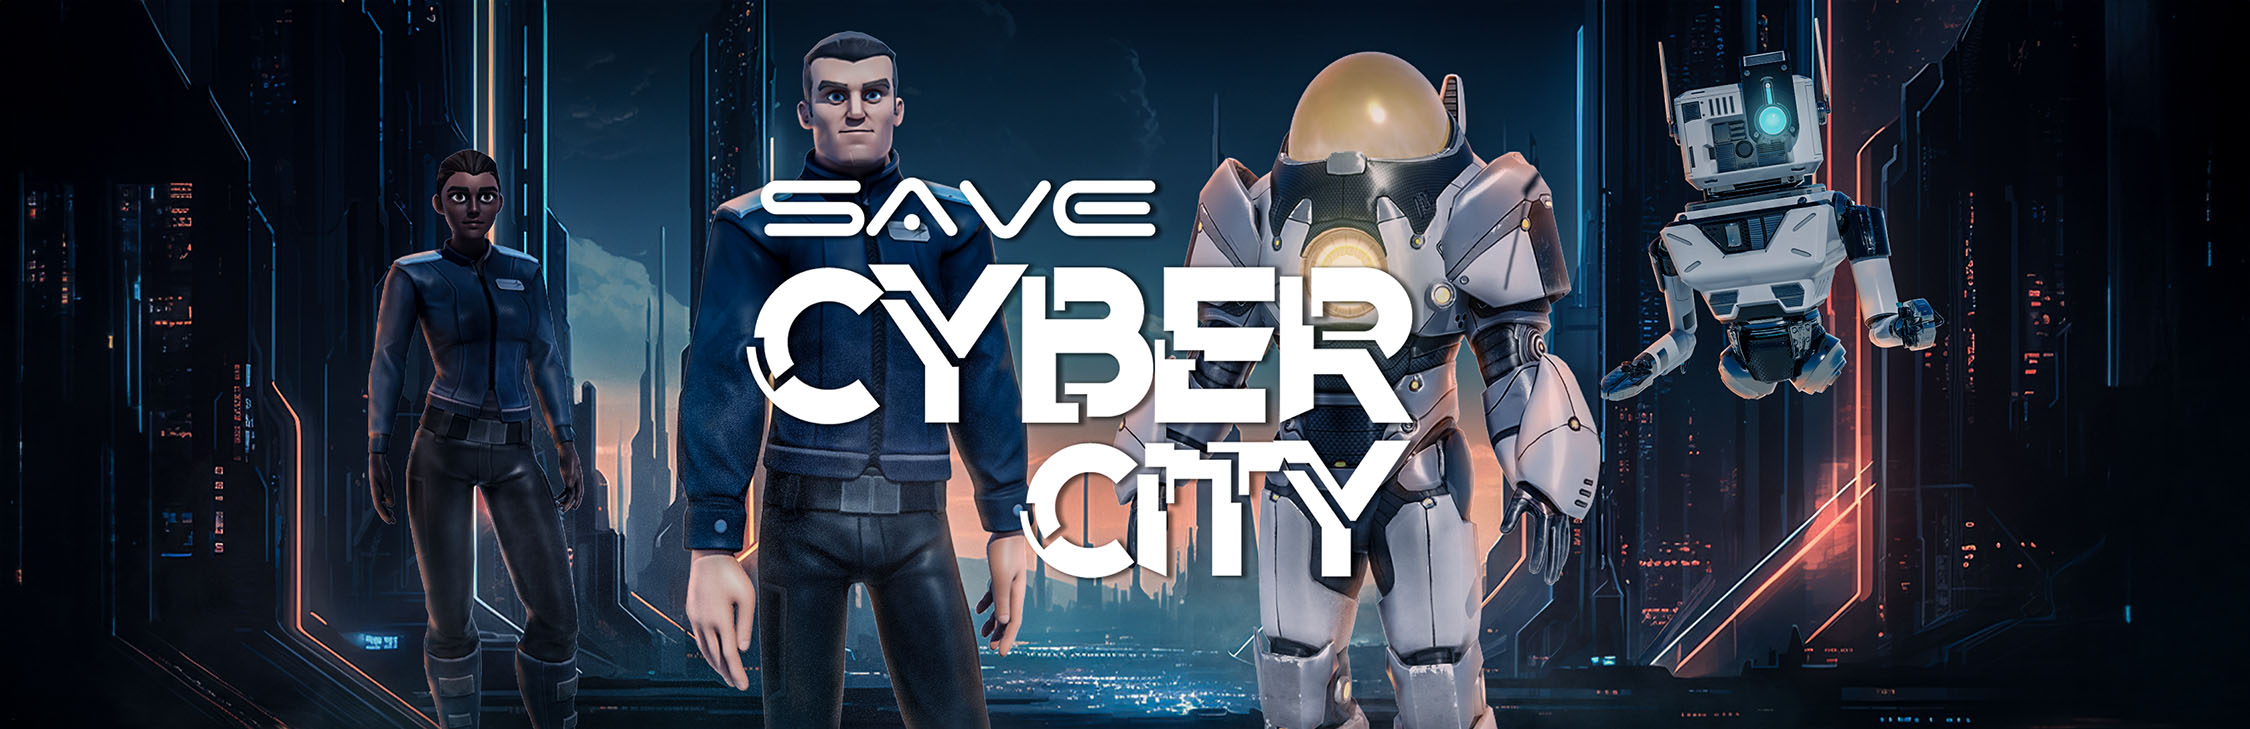 Save Cyber City